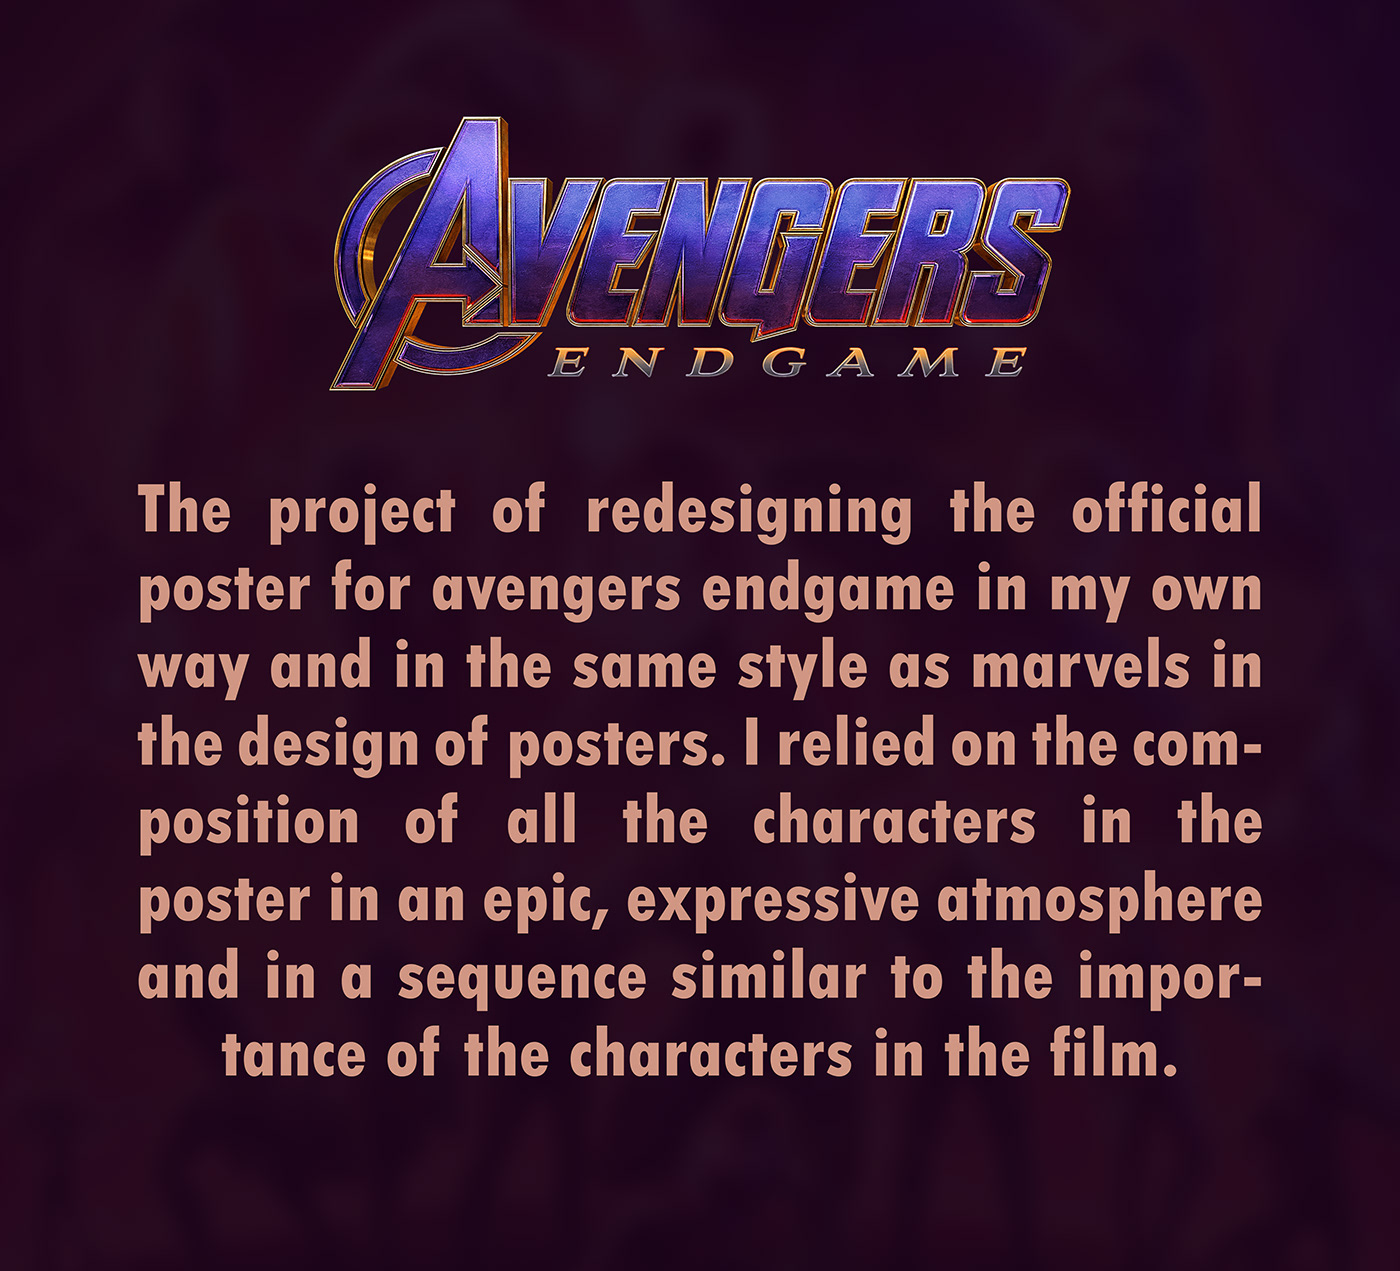 Avengers Avengers Endgame creative manipulation manipulations photoshop poster Poster Design professional Unique